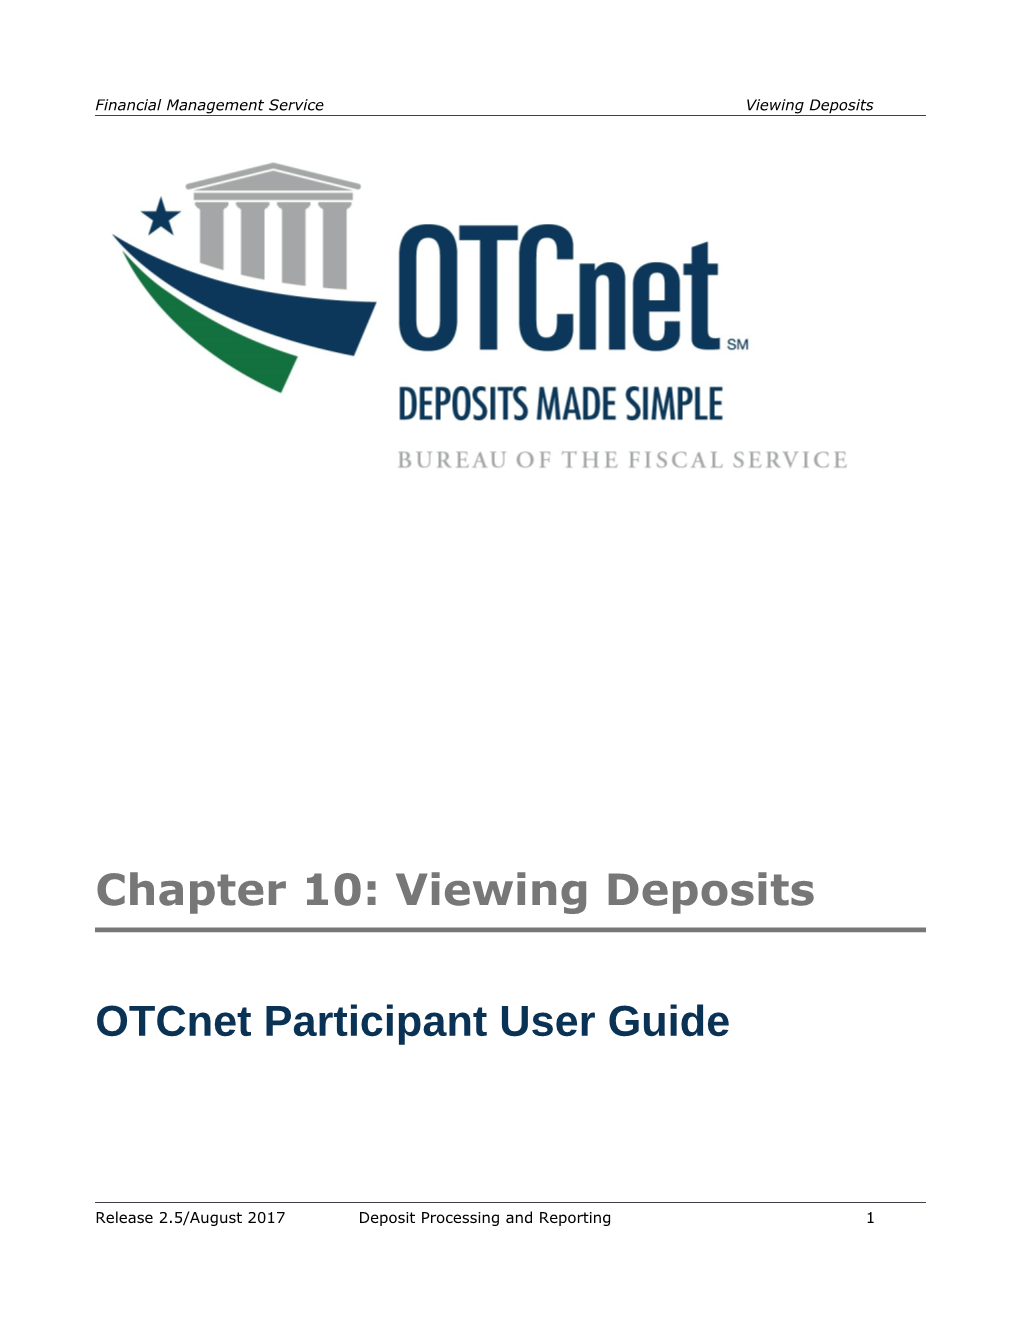 Deposit Processing: Ch 10: Viewing Deposits